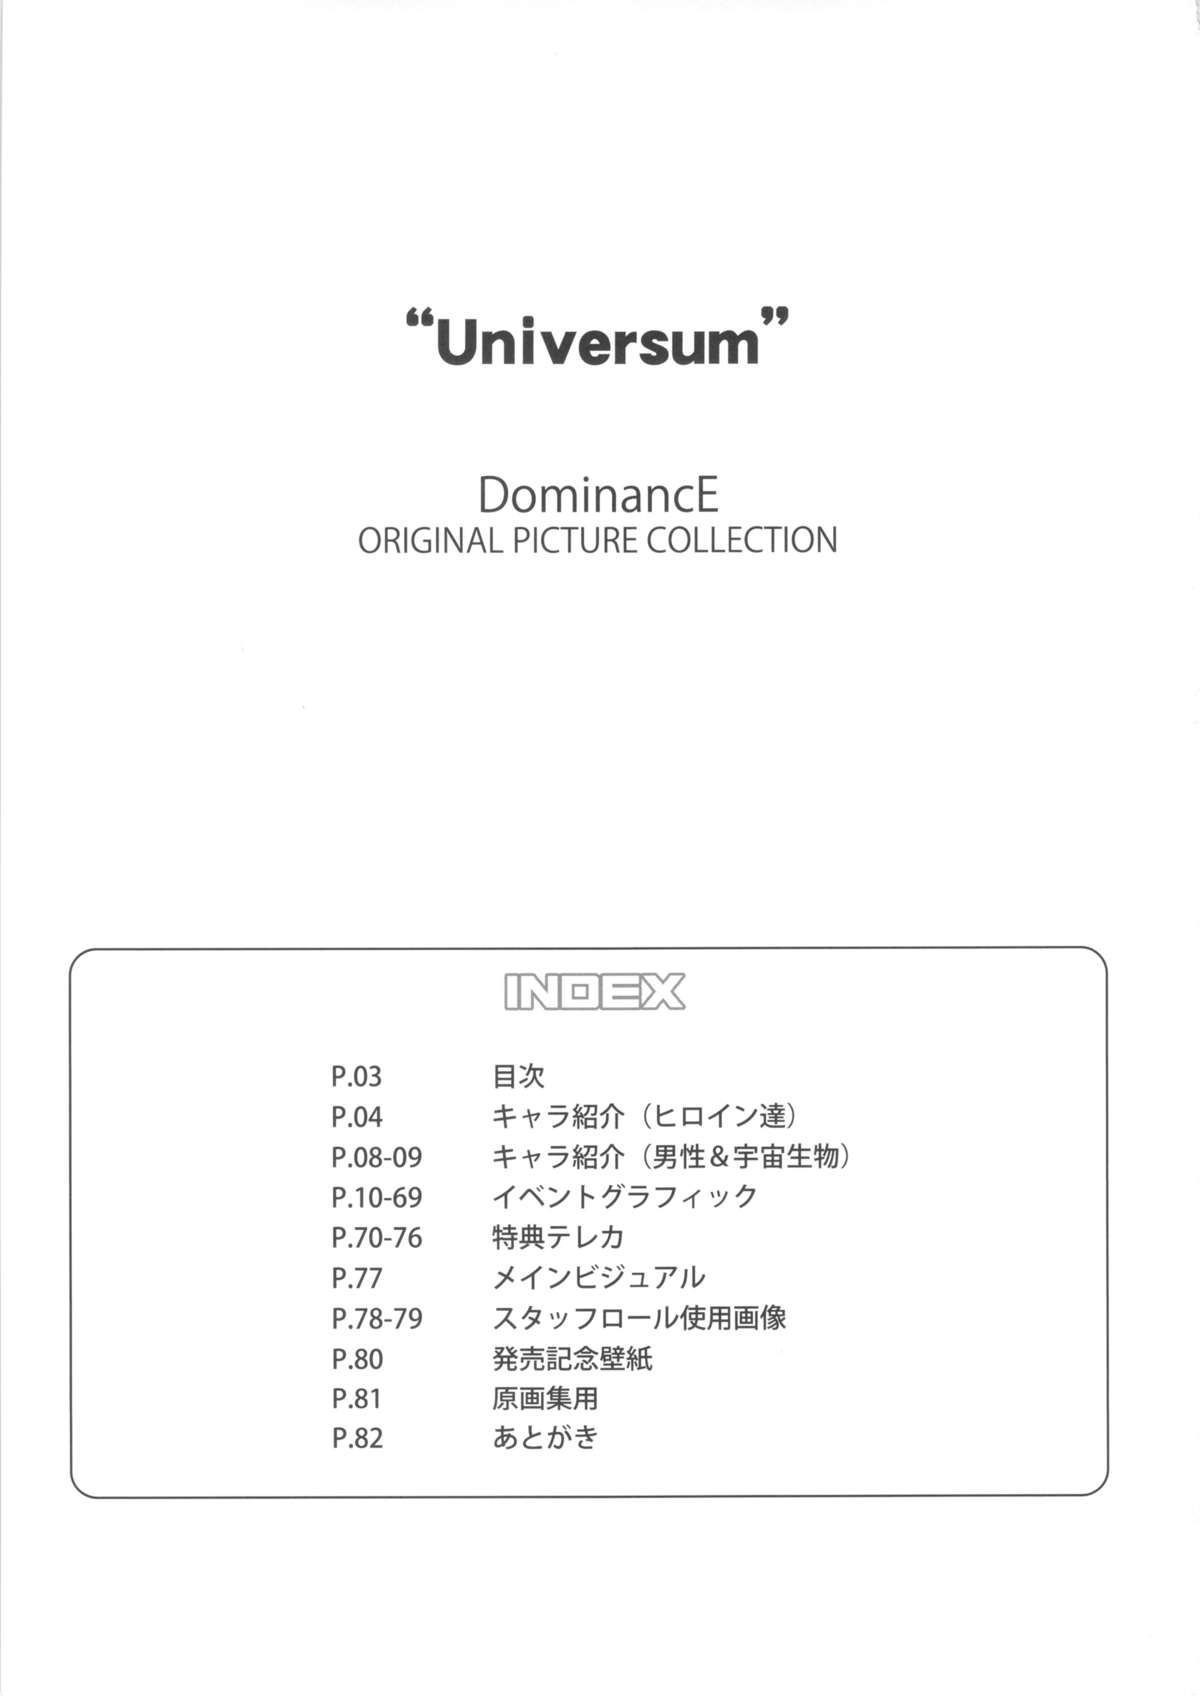 [Empress (聖少女)] Universum (DominancE)